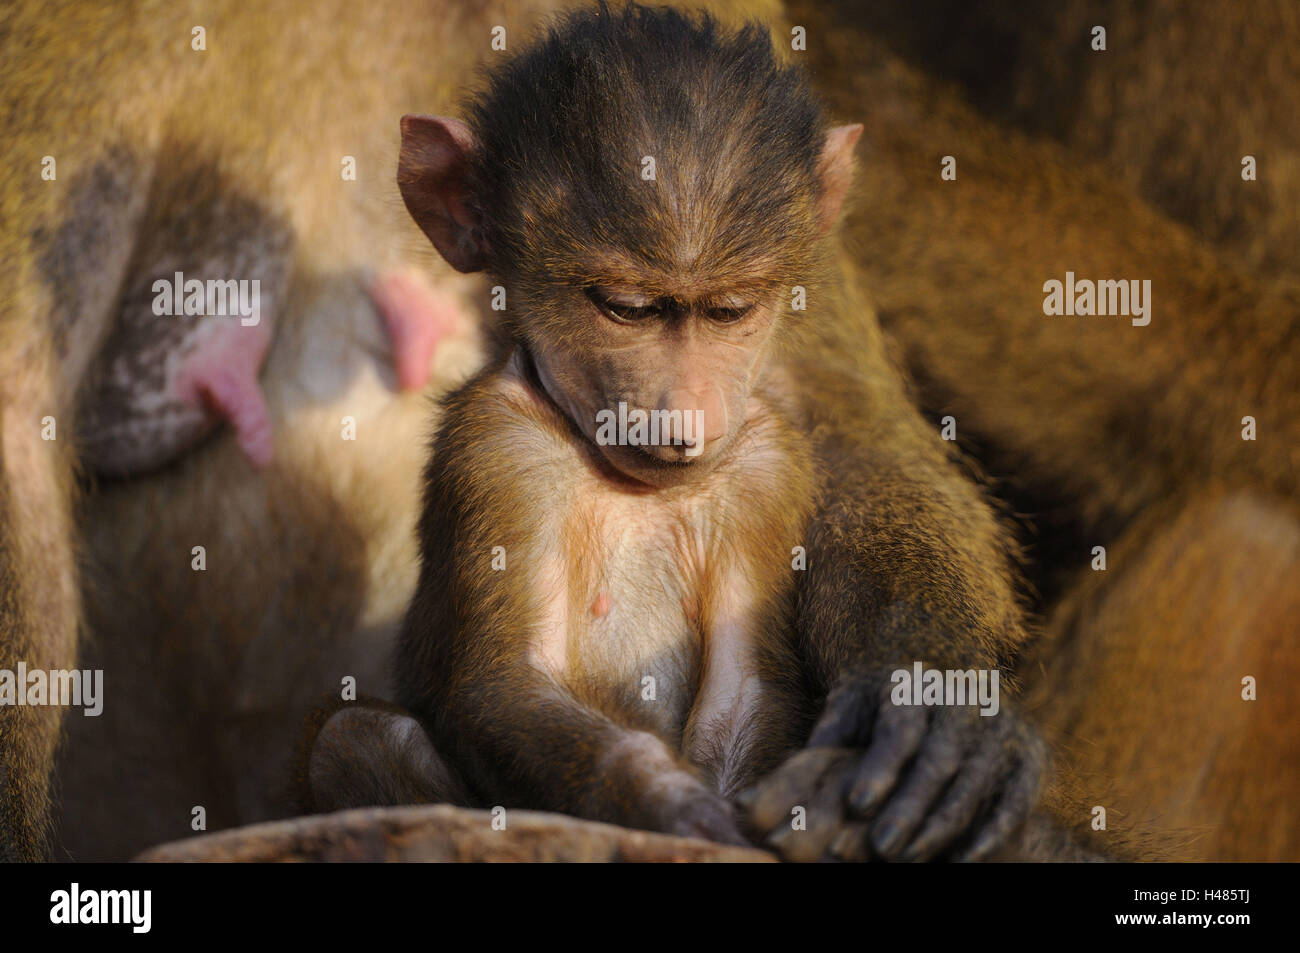 Guinea baboon, Papio papio, young animal, Stock Photo